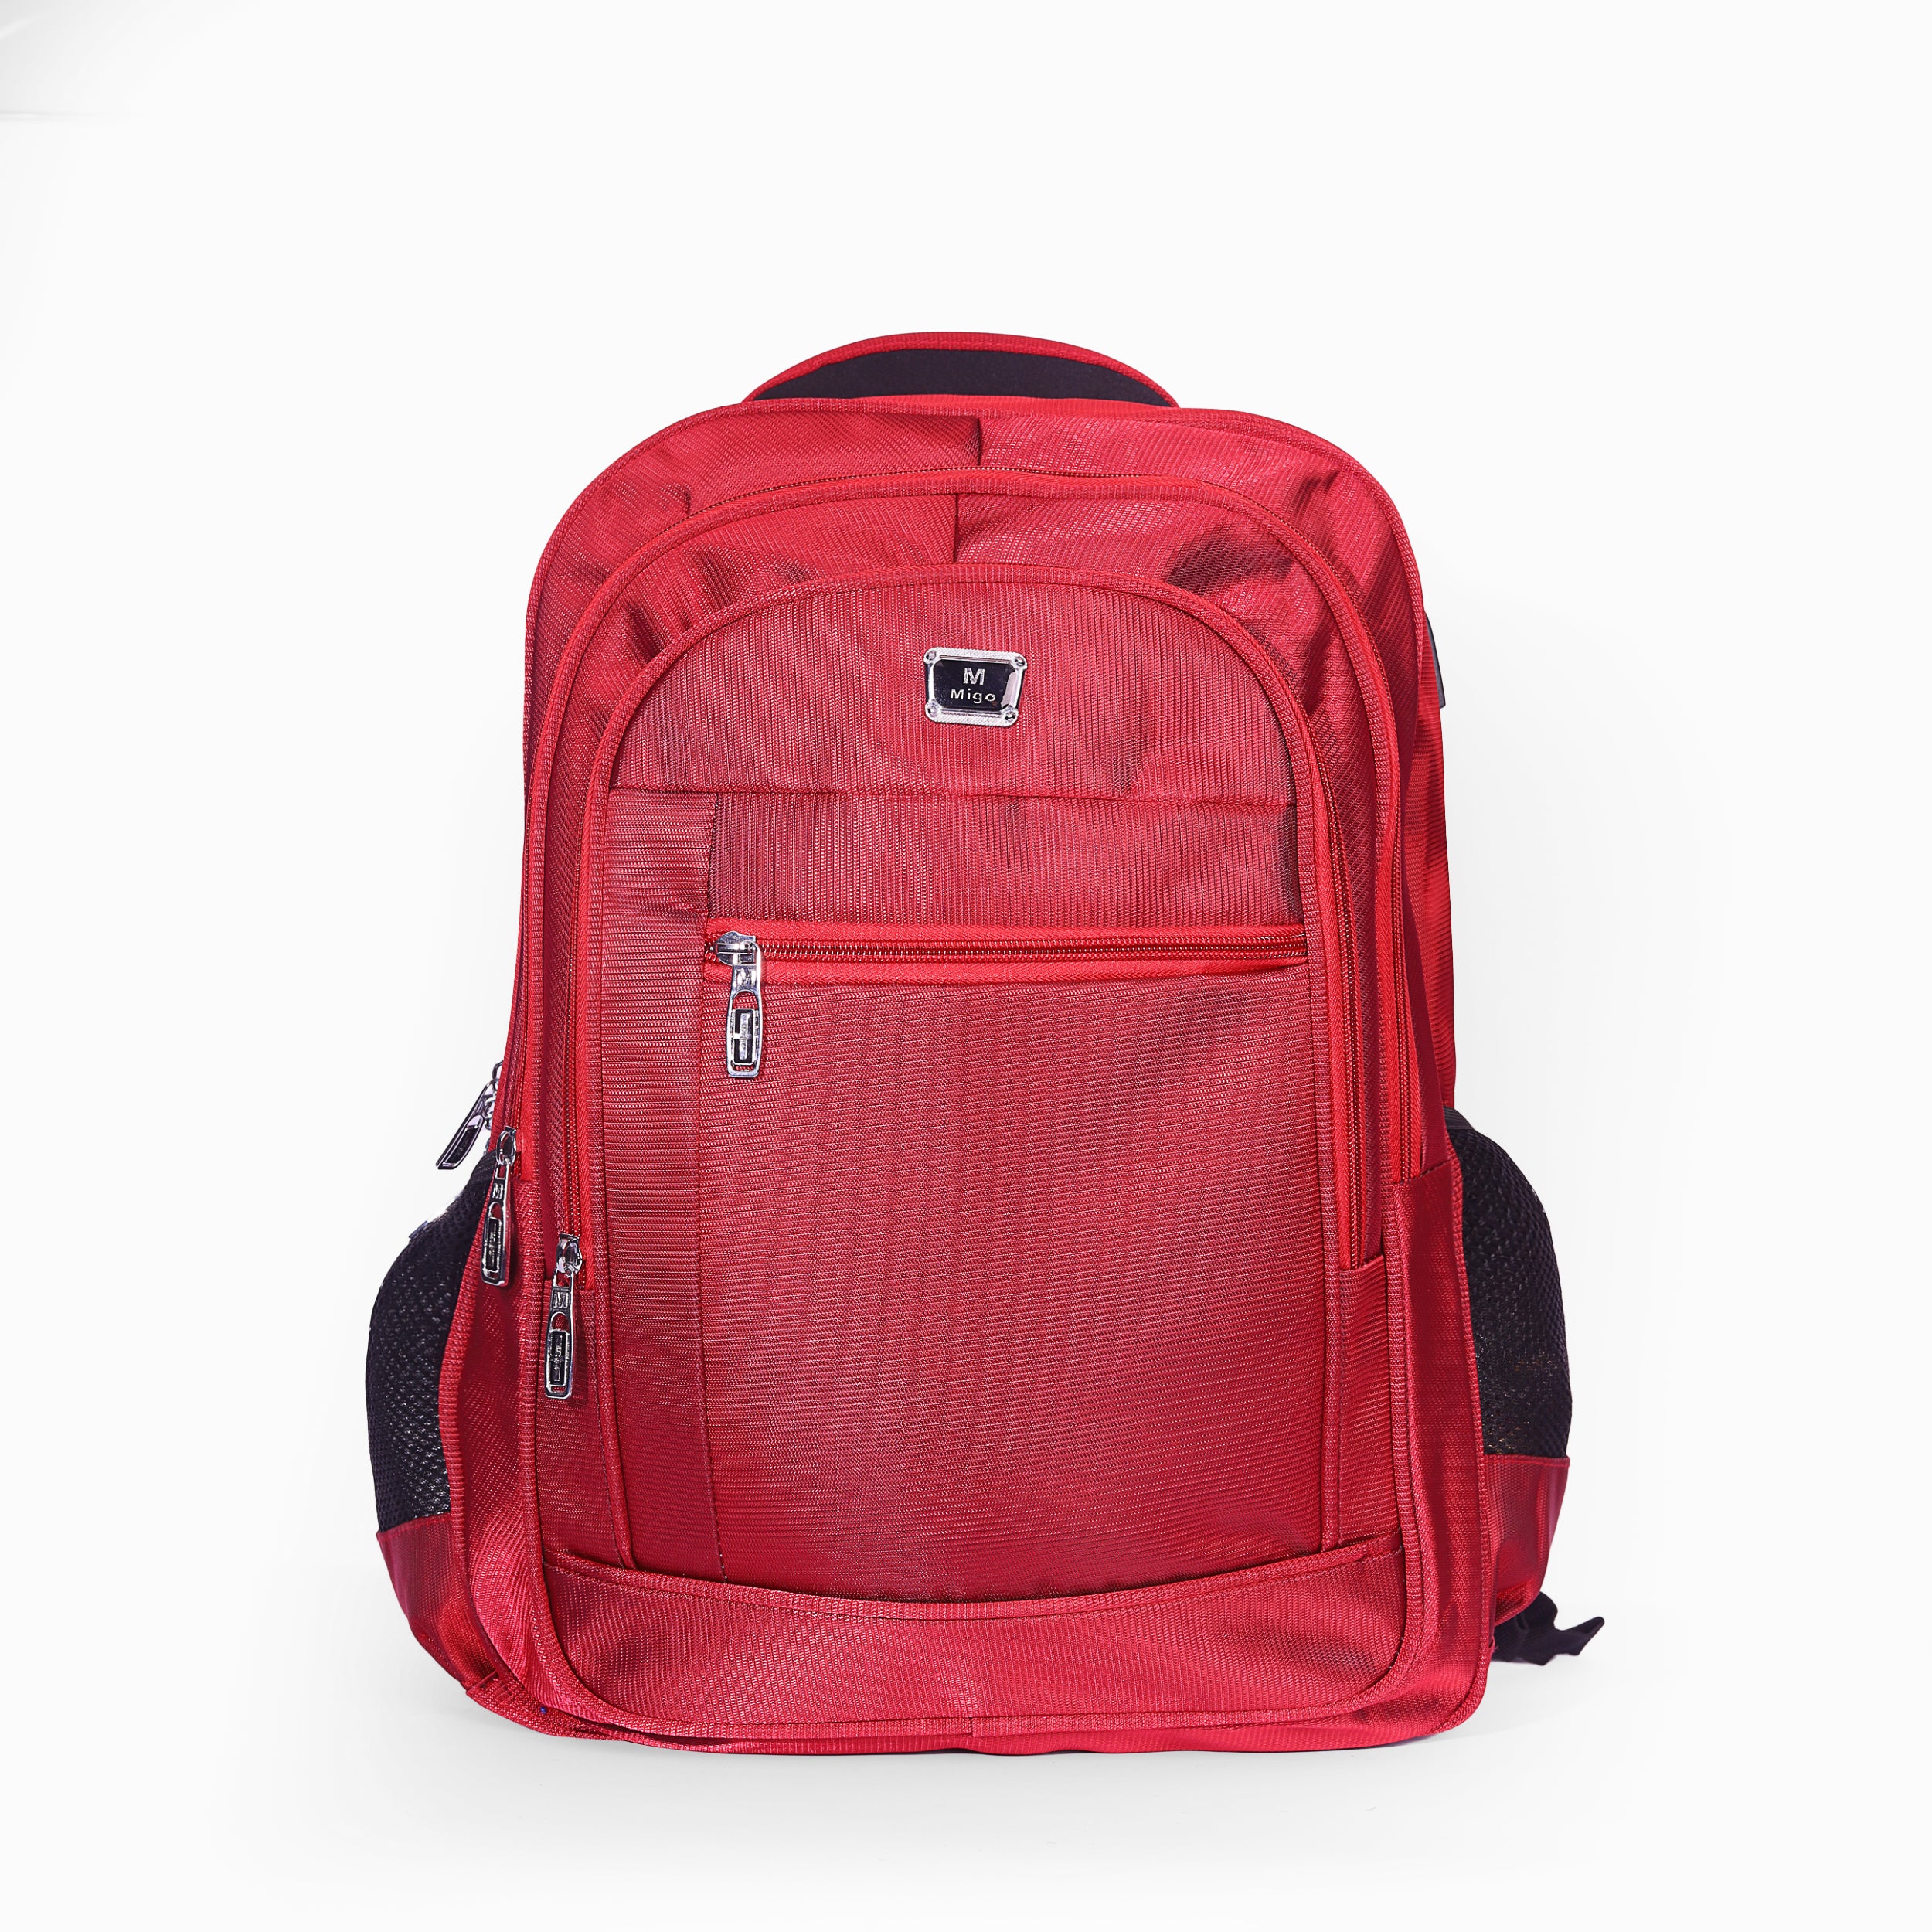 Basic VI School Bag For Teens 16 INCH